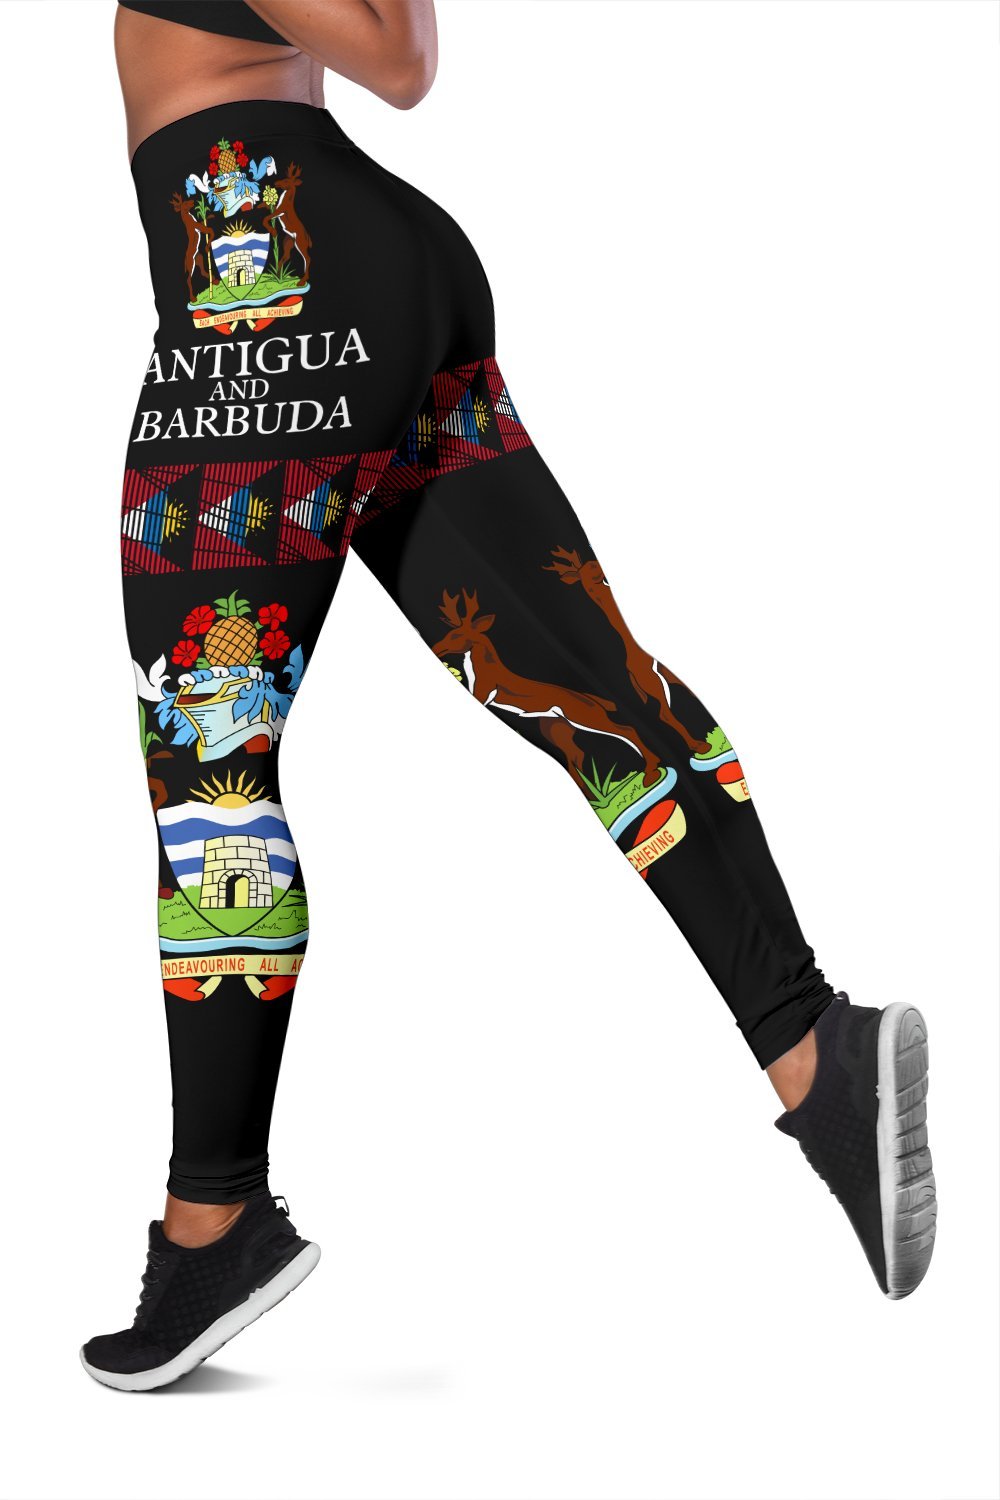 antigua-and-barbuda-united-womens-leggings